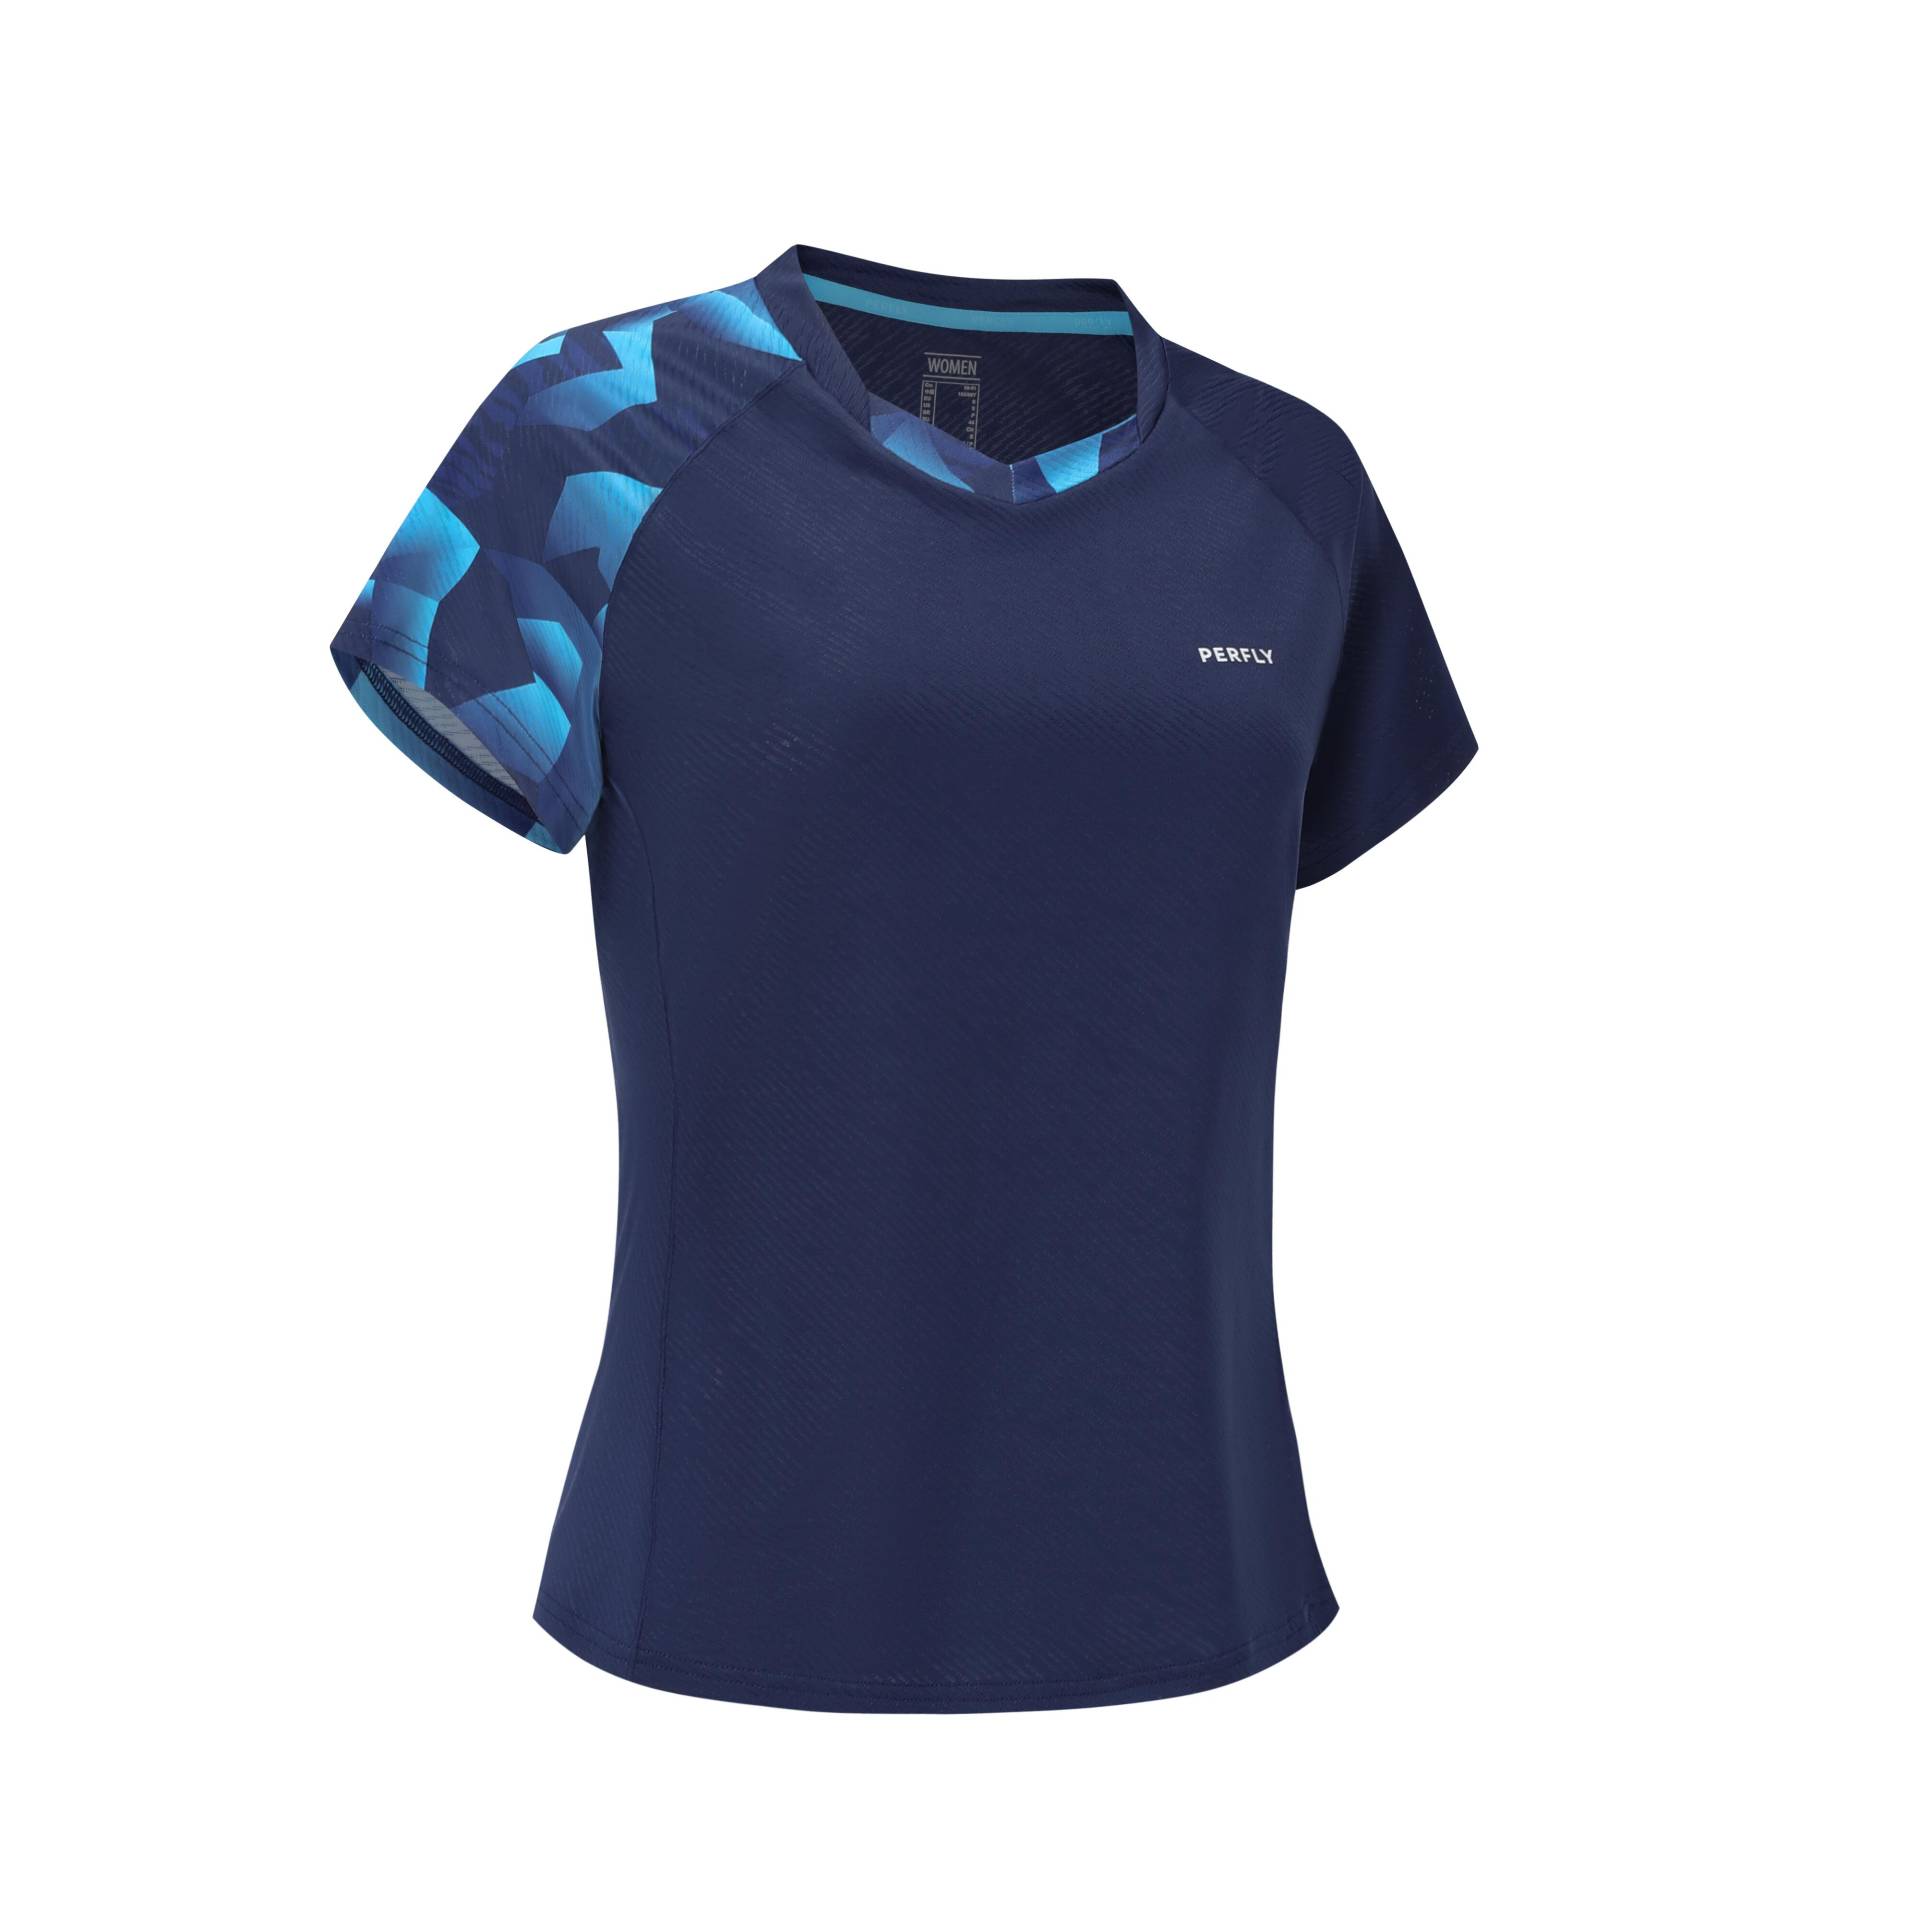 Damen Badminton T-Shirt - 560 navy/aqua von PERFLY